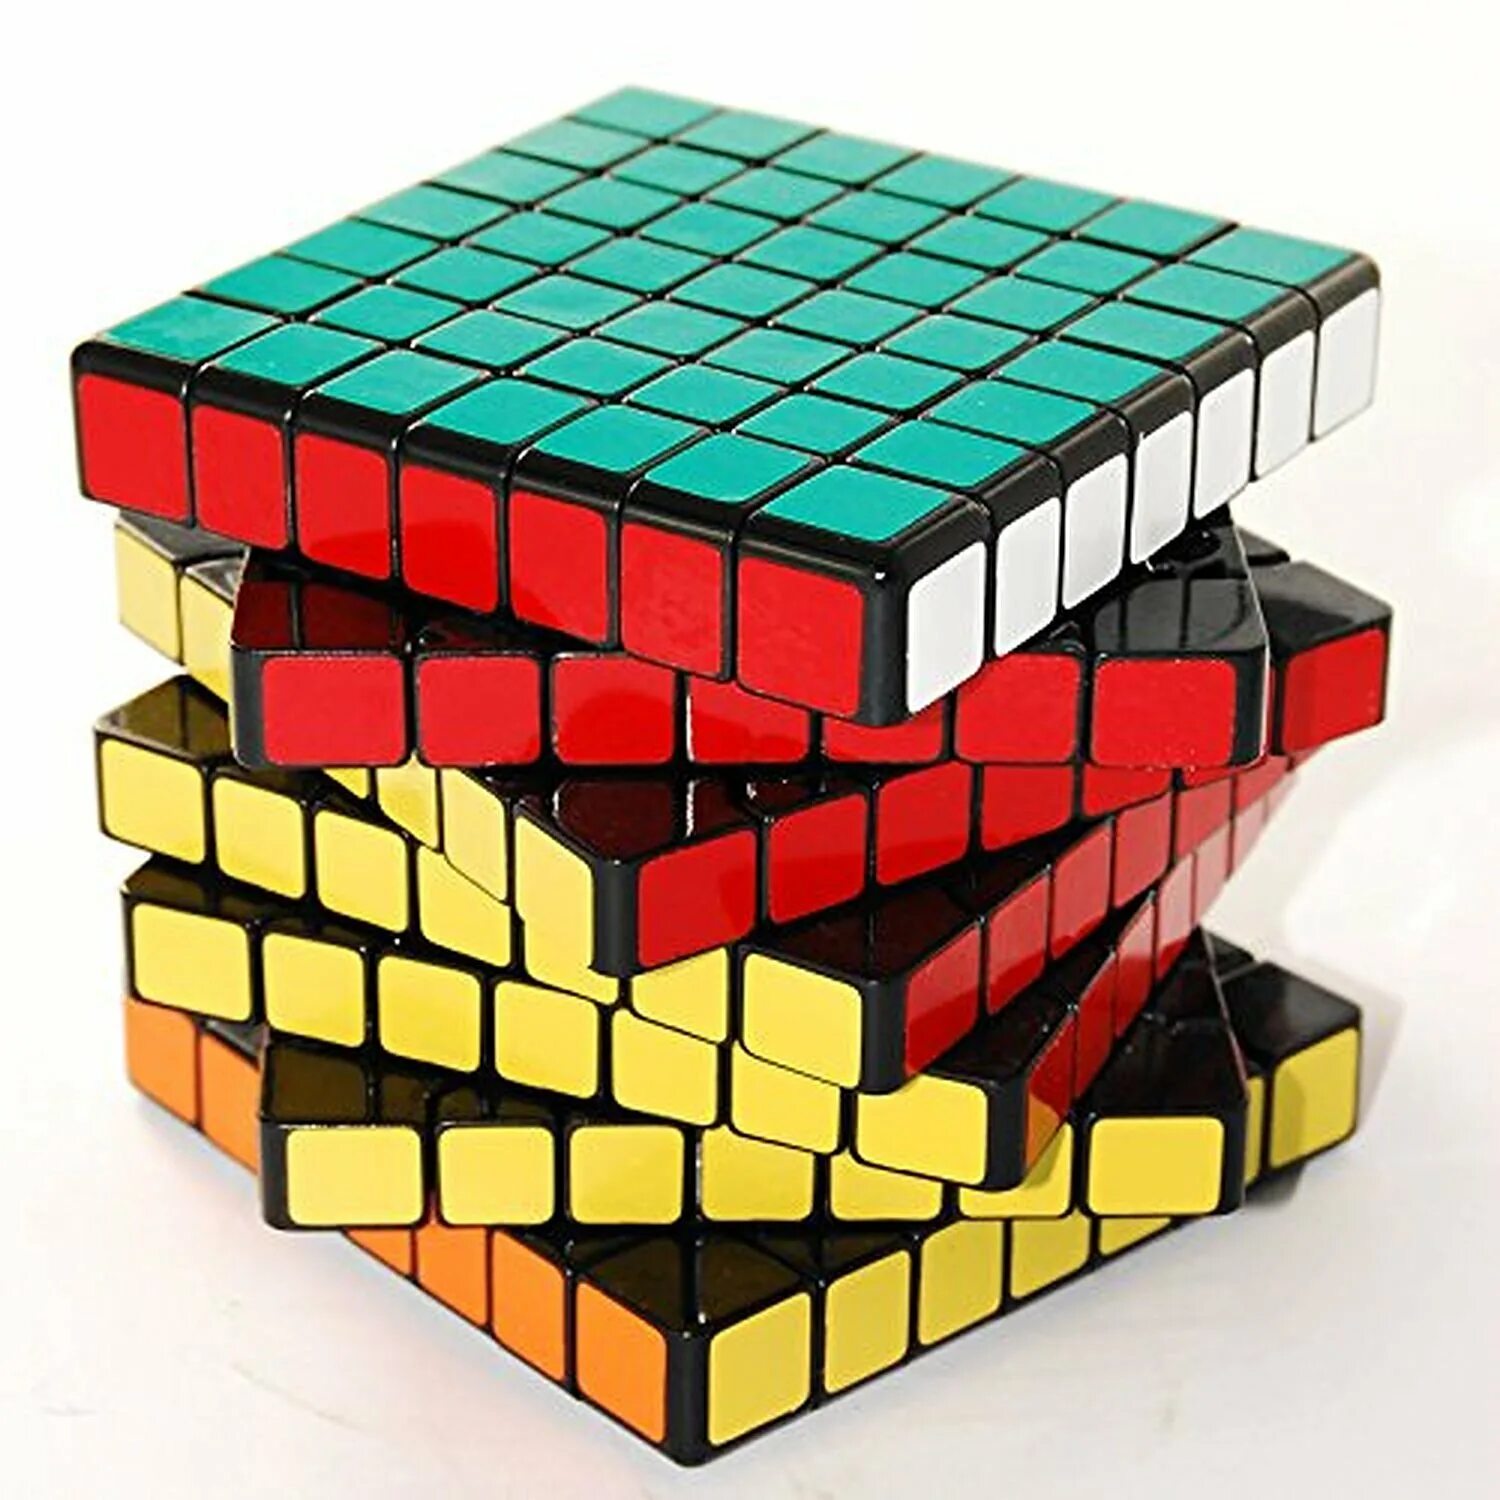 7x7 Rubiks Cube. Shengshou Mastermorphix 7x7x7. Shengshou 7x7 Mini. Rubik's Cube 7x7x7.